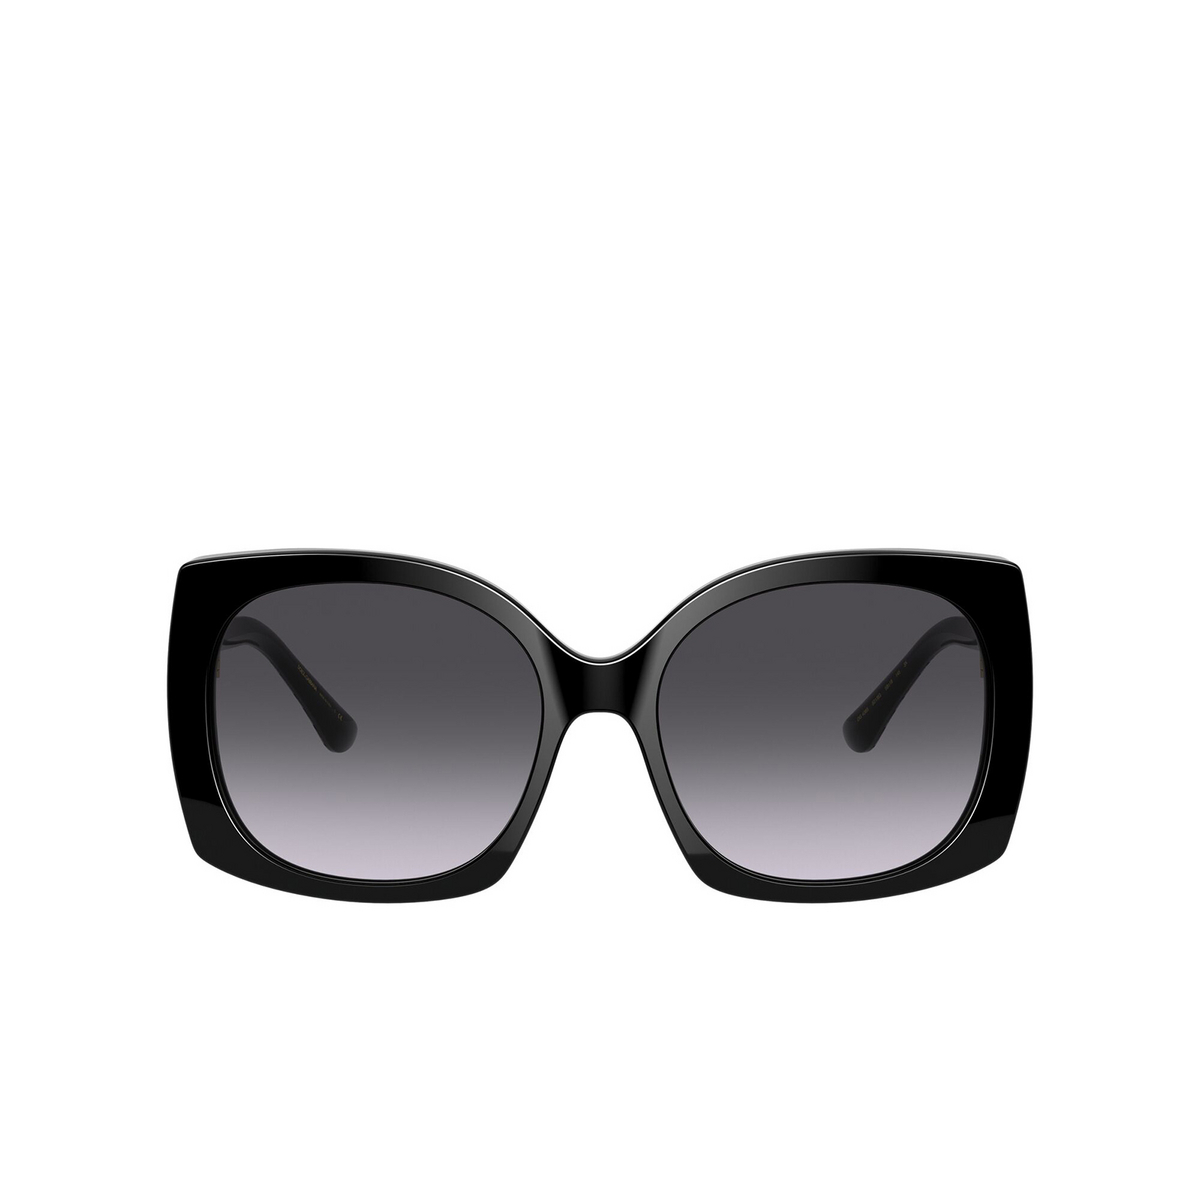 Dolce & Gabbana DG4385 Sunglasses 501/8G Black - front view